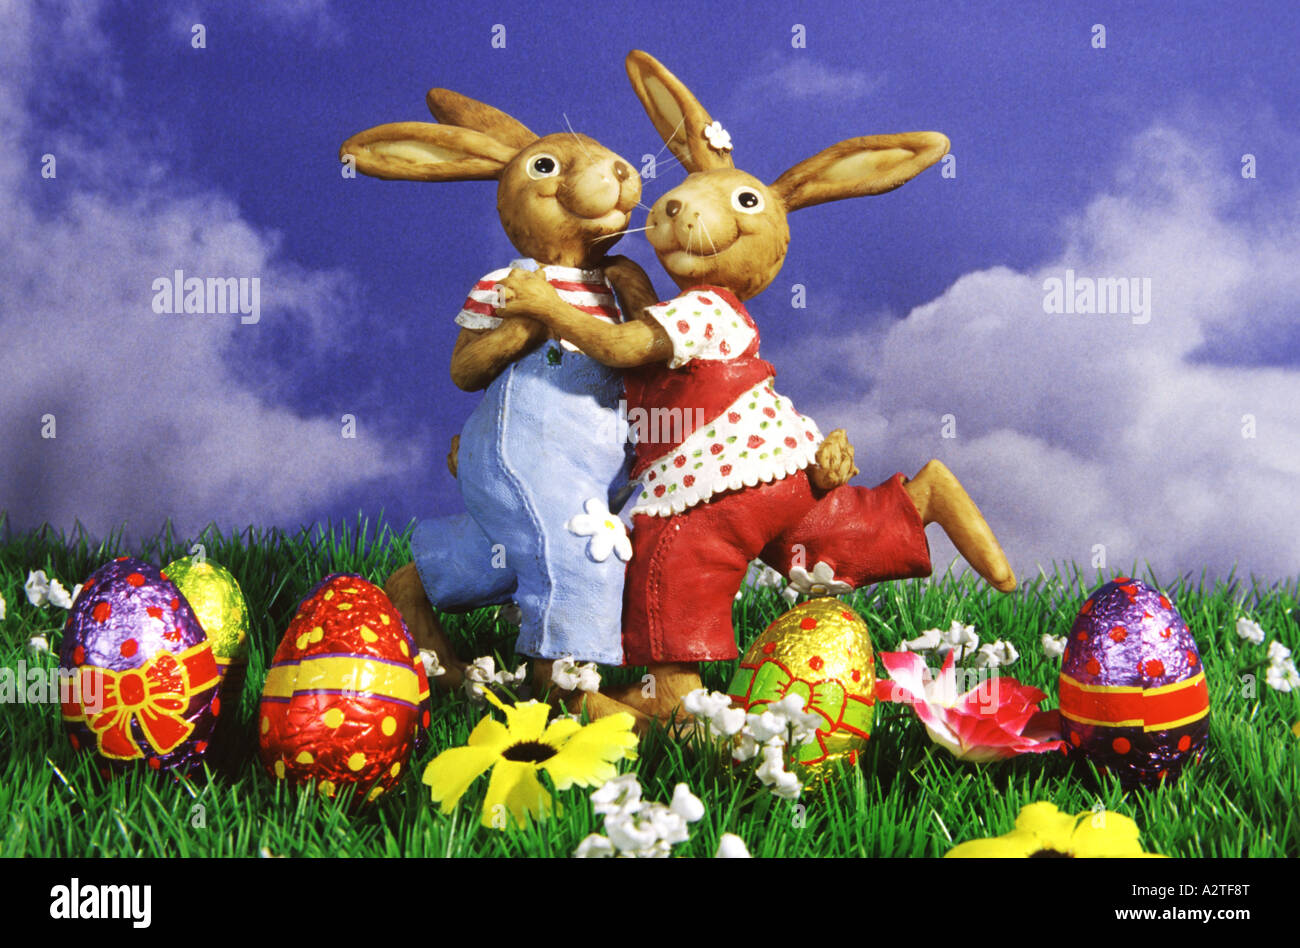 Dancing bunnies -Fotos und -Bildmaterial in hoher Auflösung – Alamy